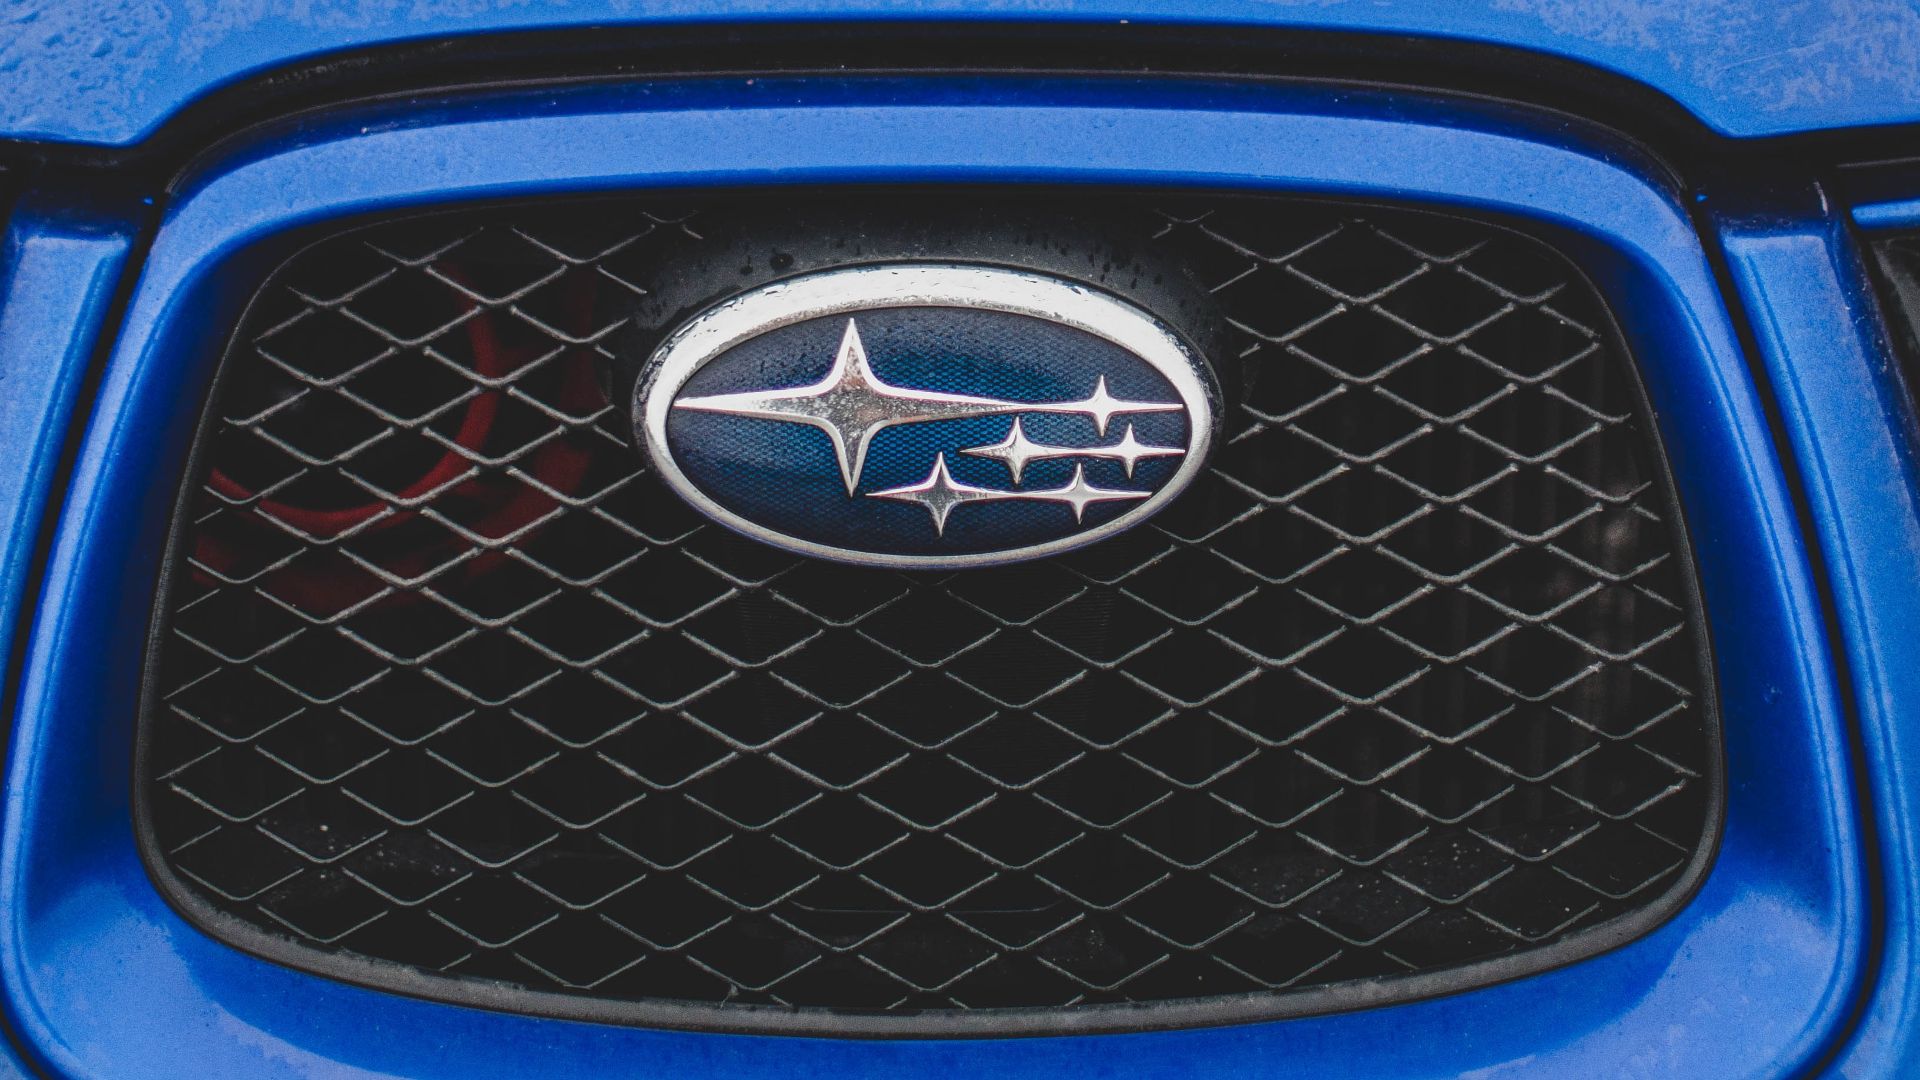 a close up of the emblem on a blue car.